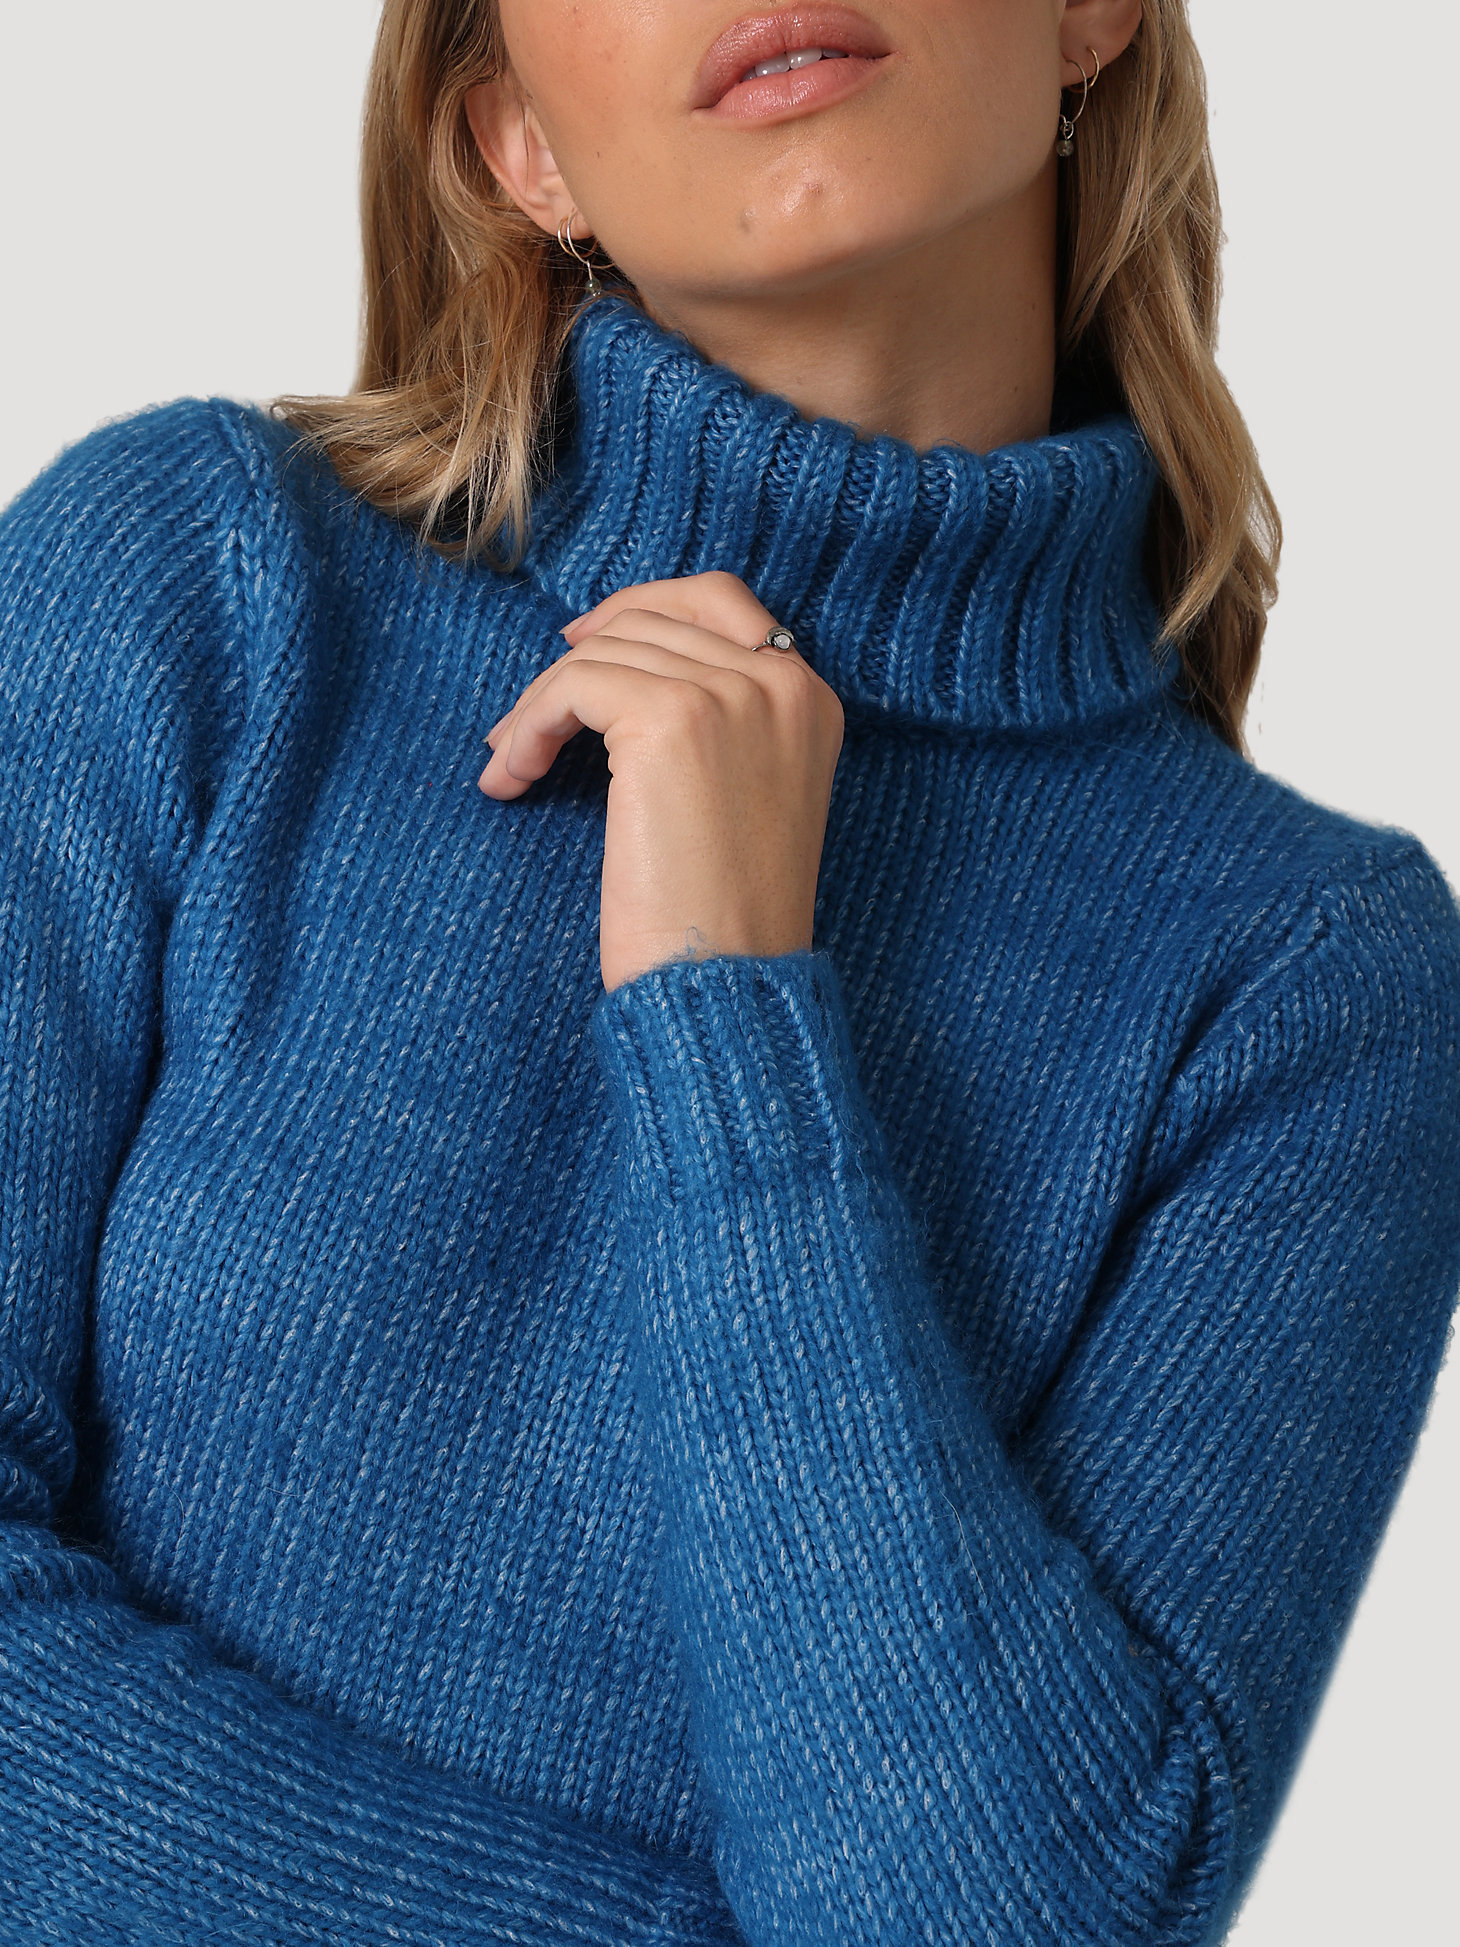 Women's Plush Sweater in Daphne Blue alternative view 2